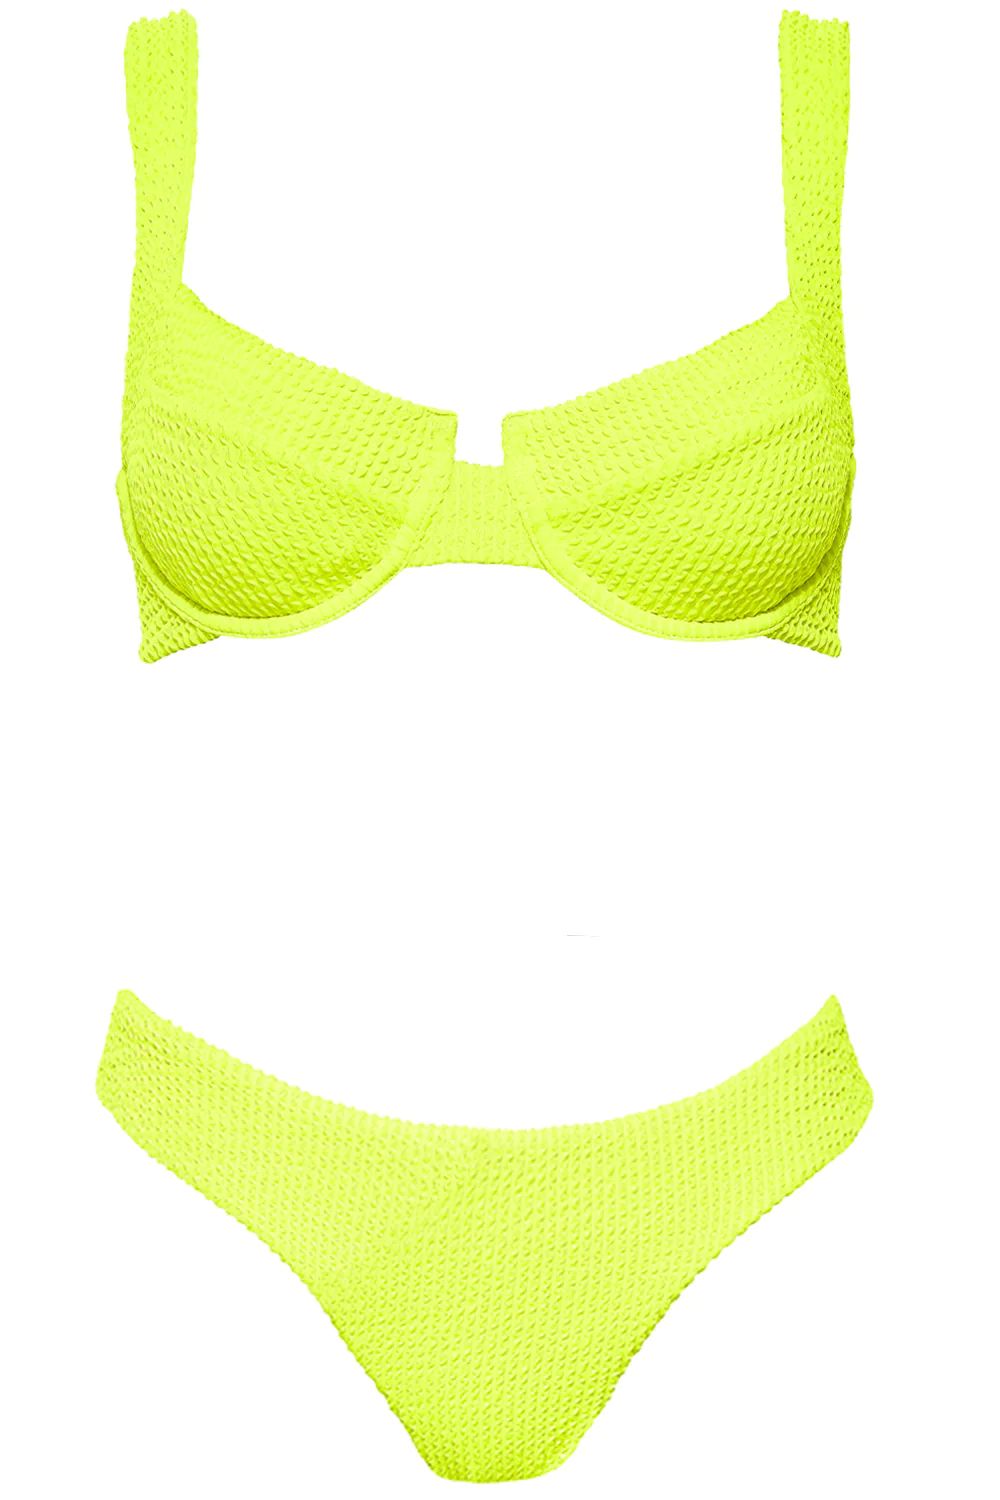 Laguna Bikini Neon Yellow Set | VETCHY